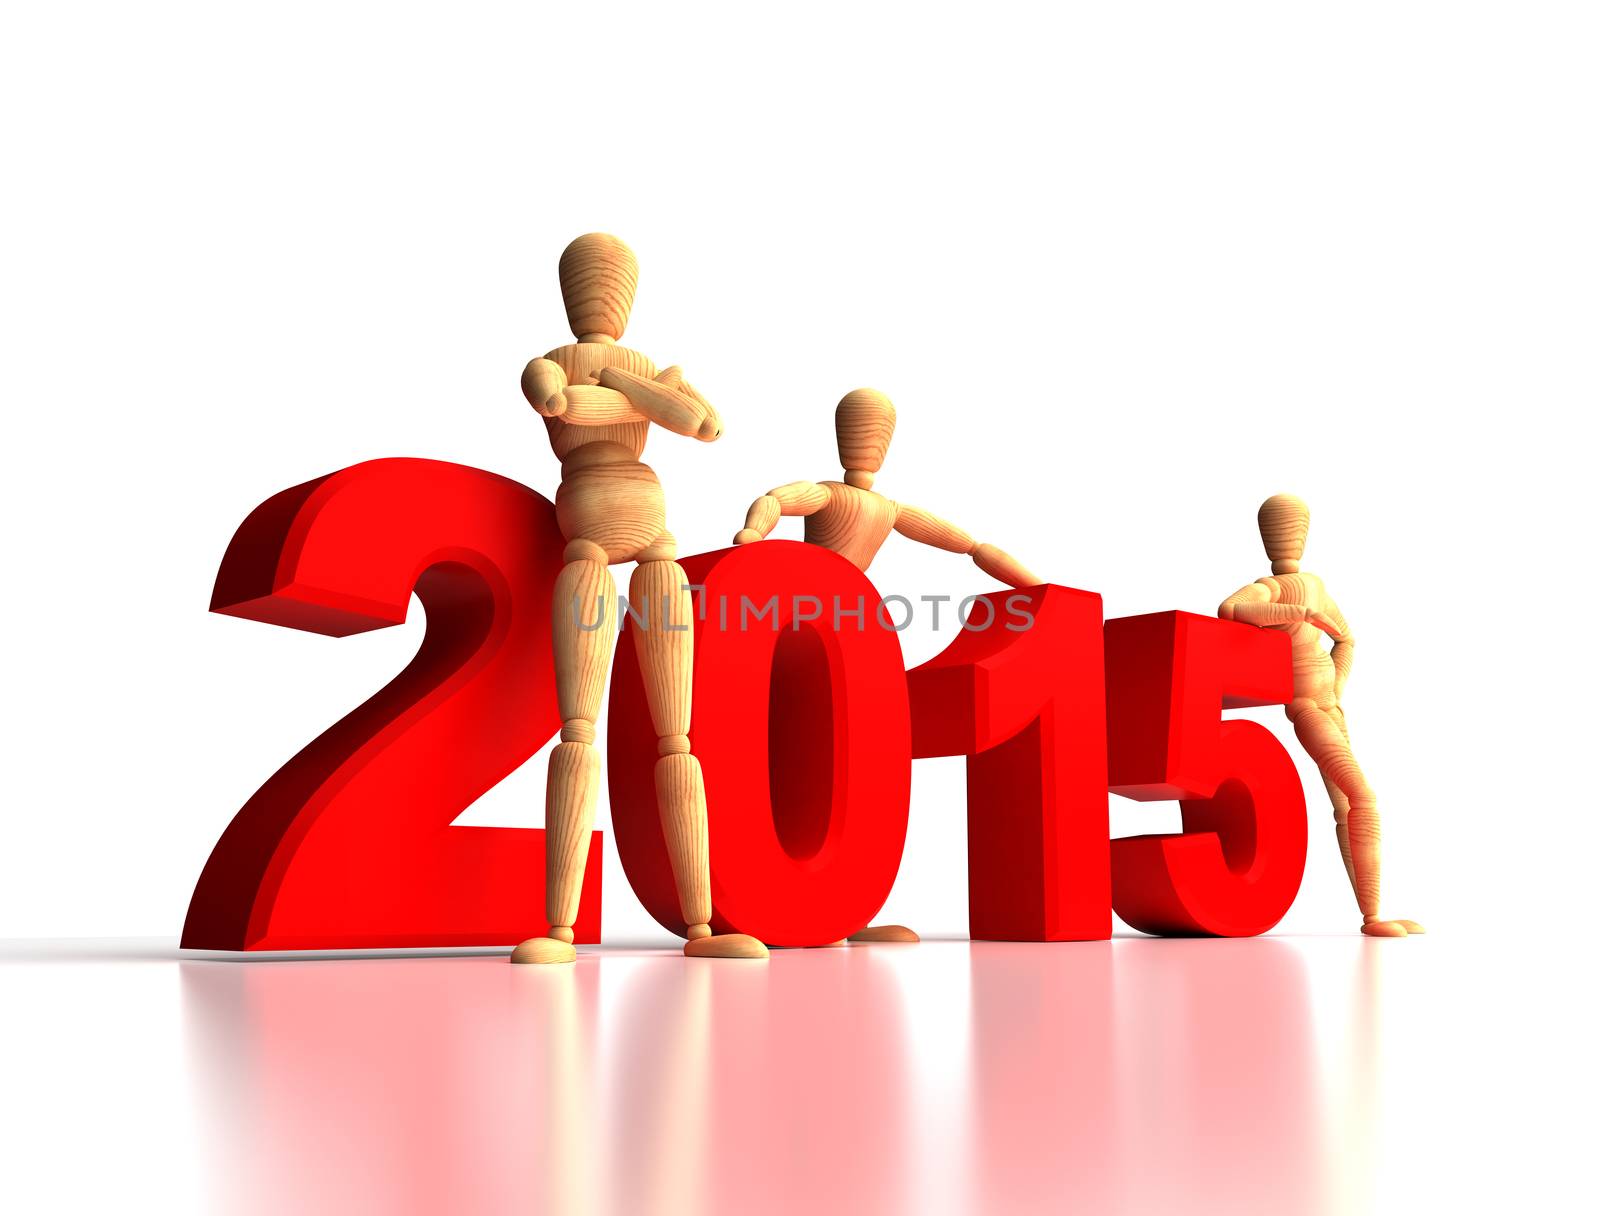 2015 New Years Team